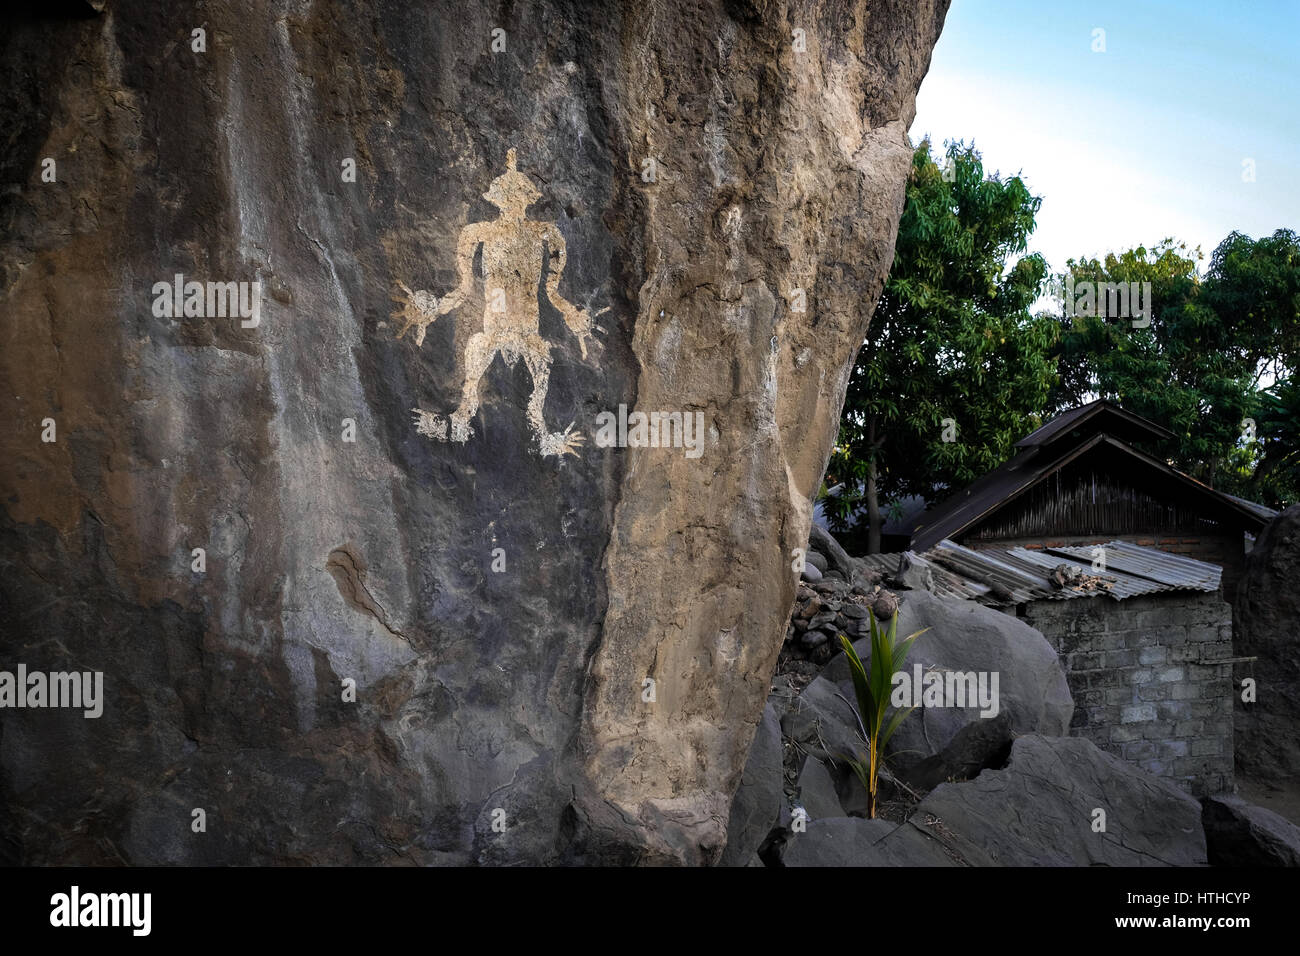 An ancient human figure painted on natural cliff in Lamagute village, Ile Ape Timur, Lembata, East Nusa Tenggara, Indonesia. Stock Photo